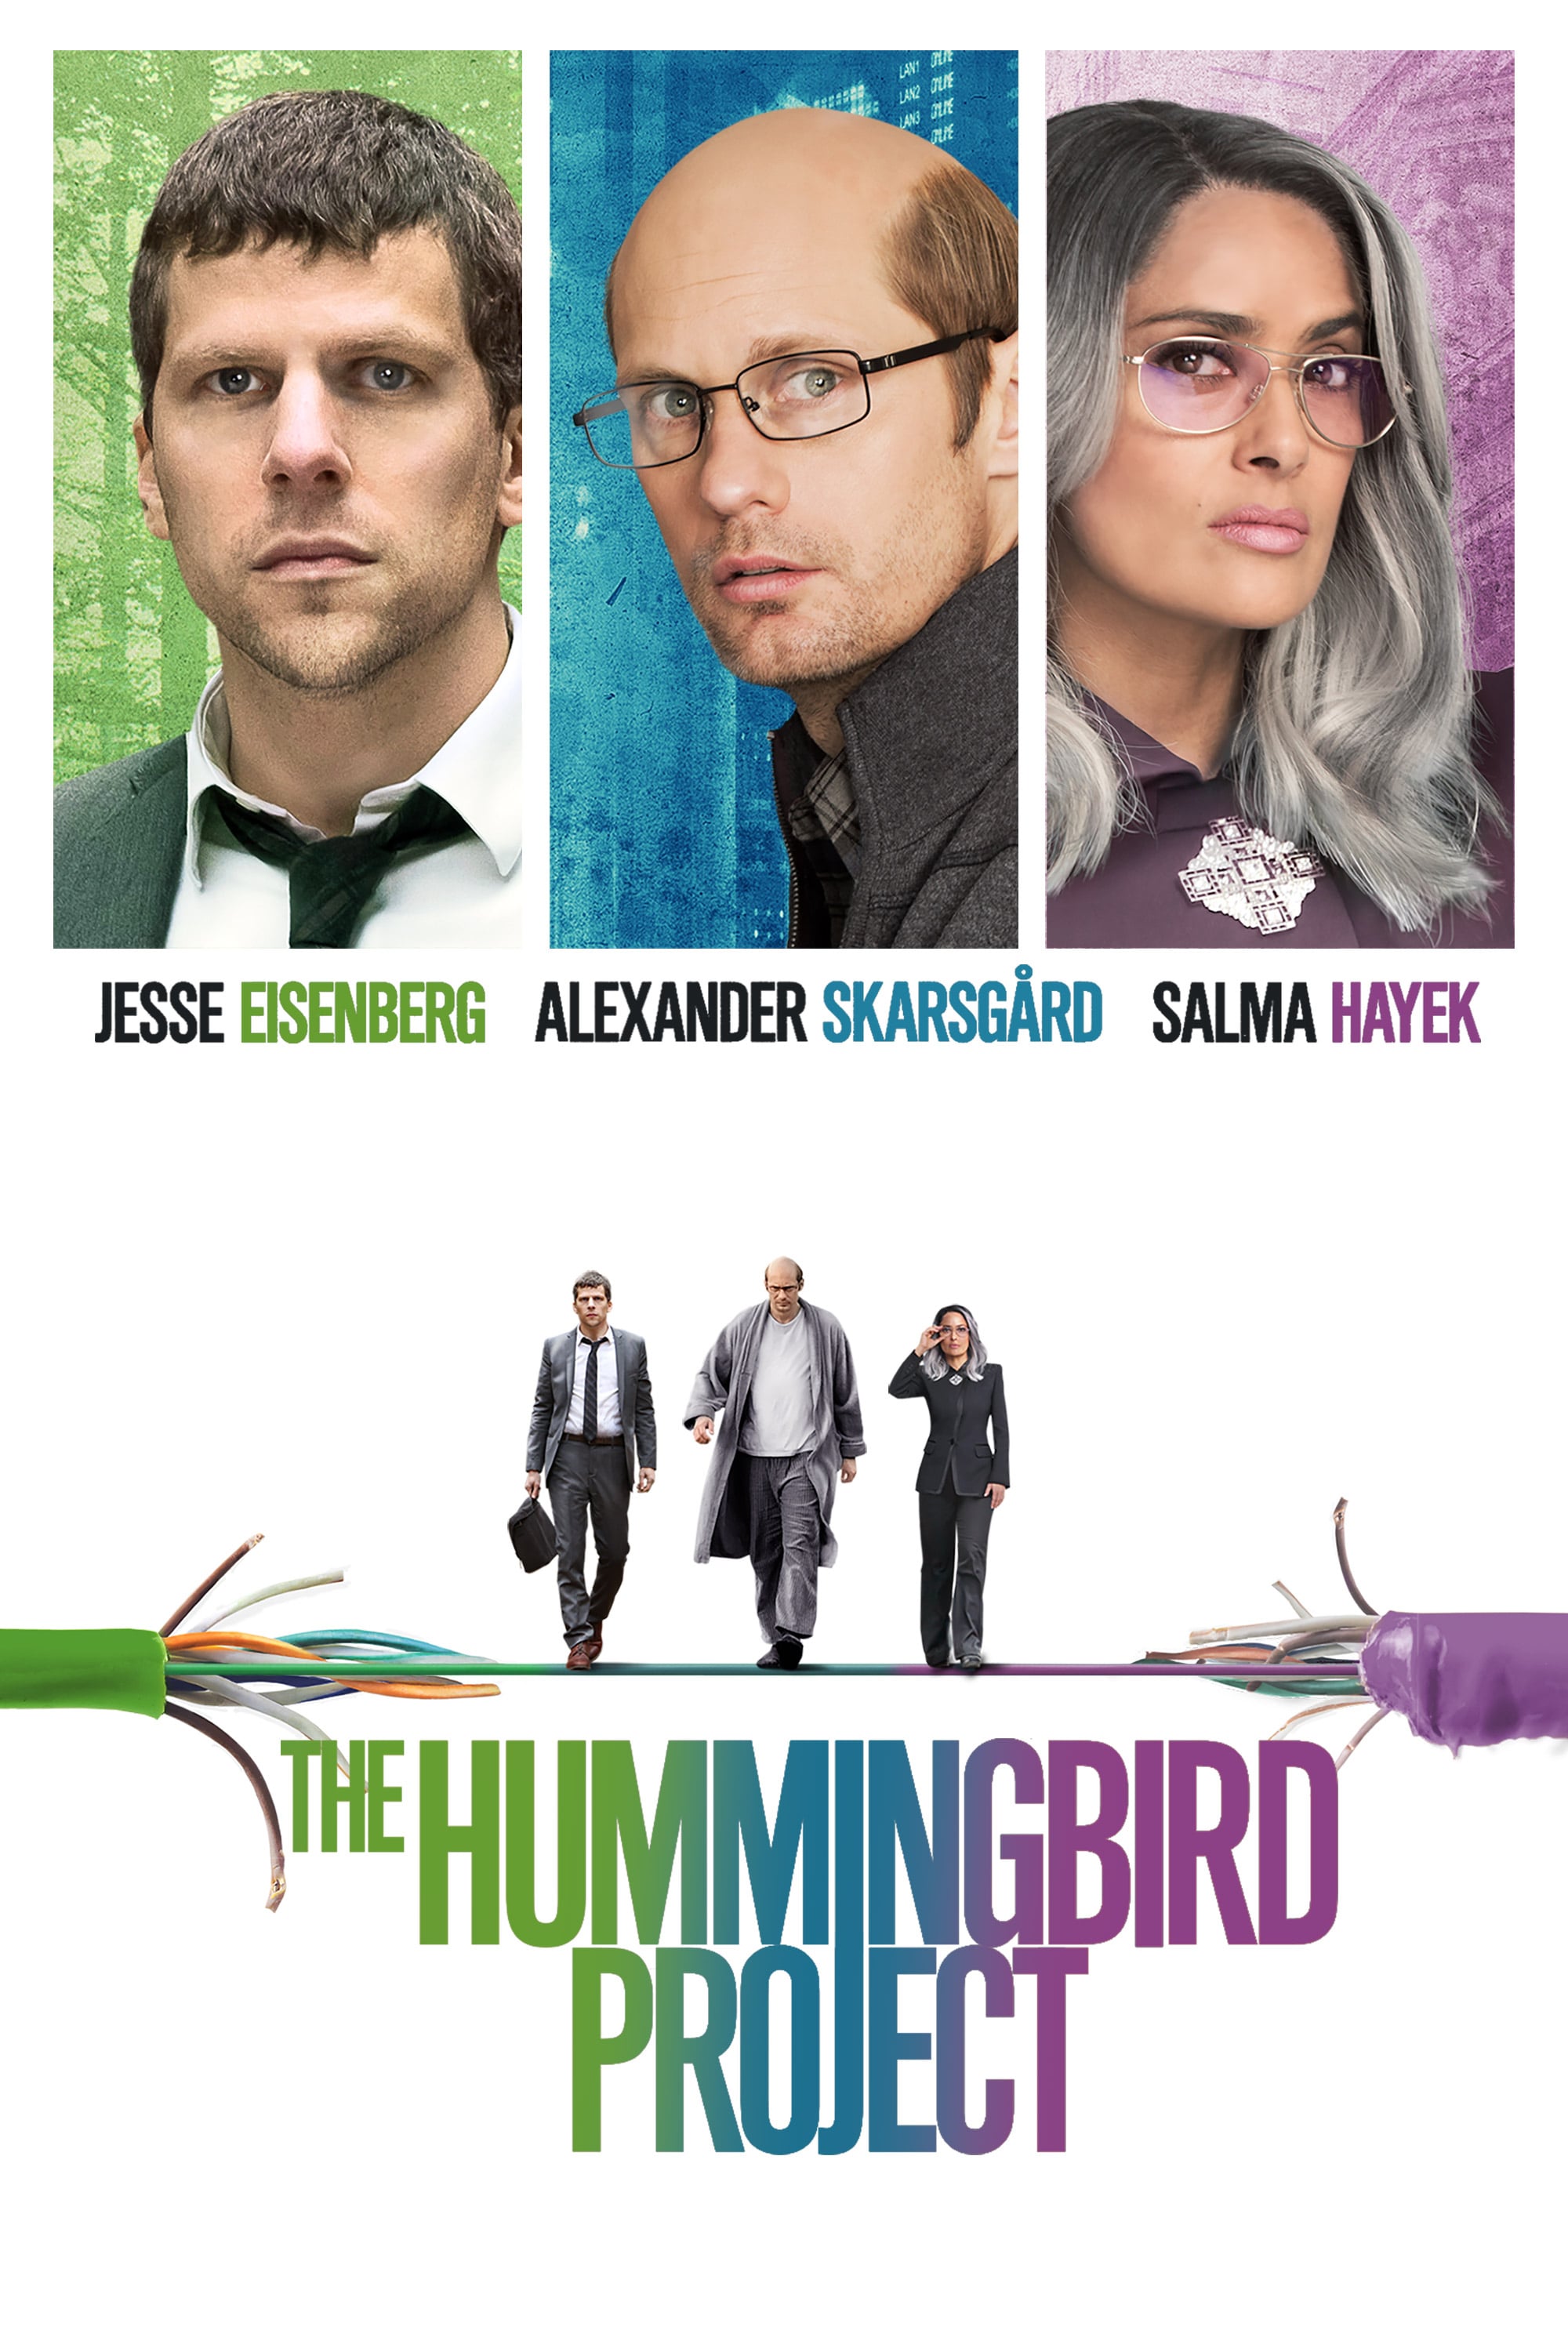 Plakat von "The Hummingbird Project"